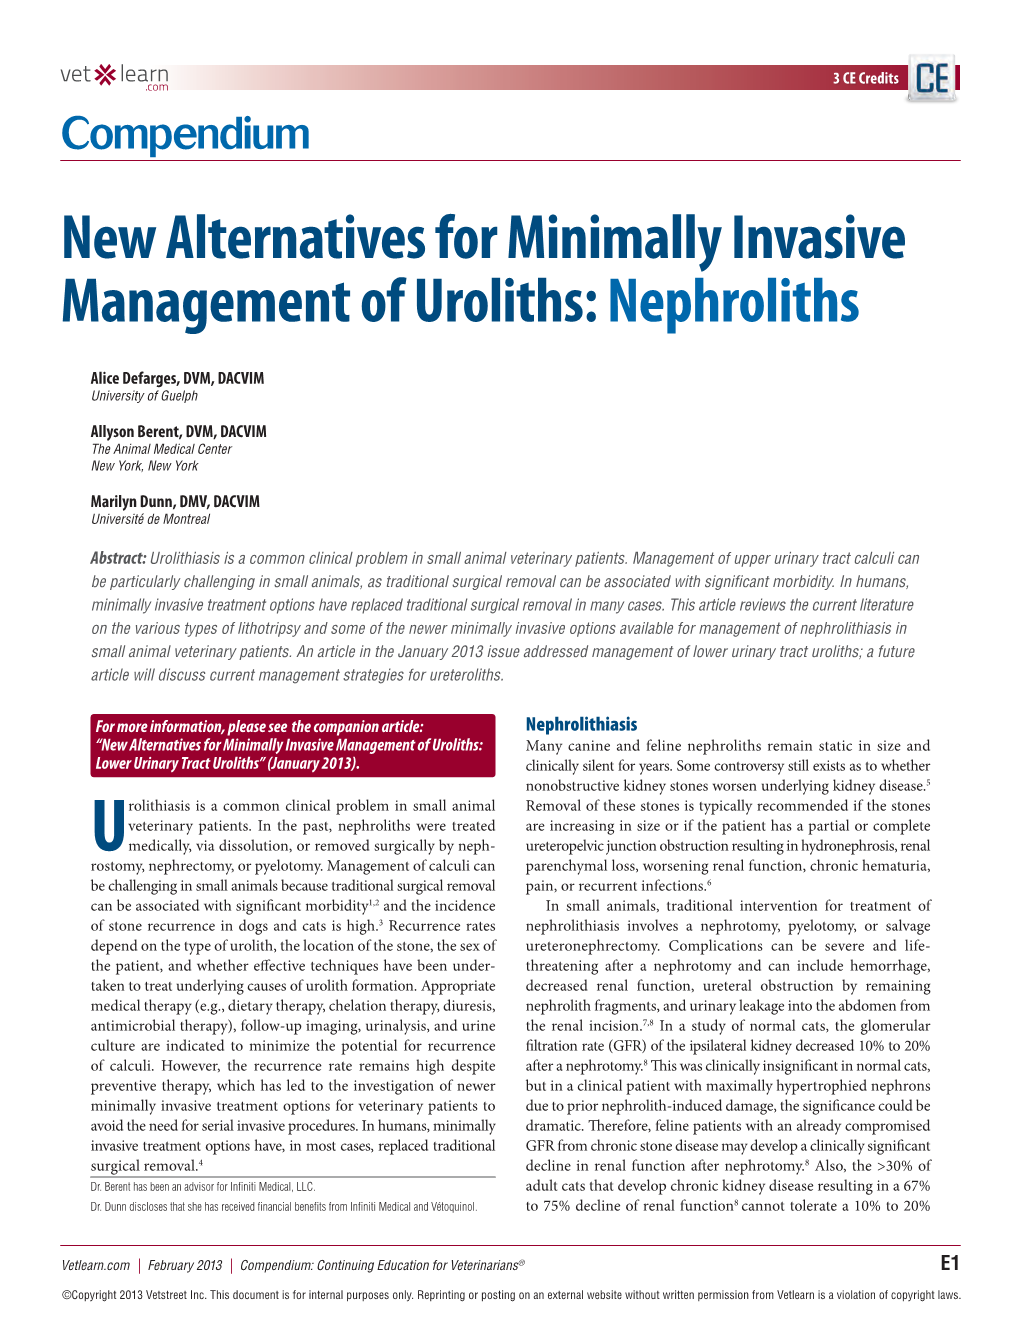 New Alternatives for Minimally Invasive Management of Uroliths: Nephroliths